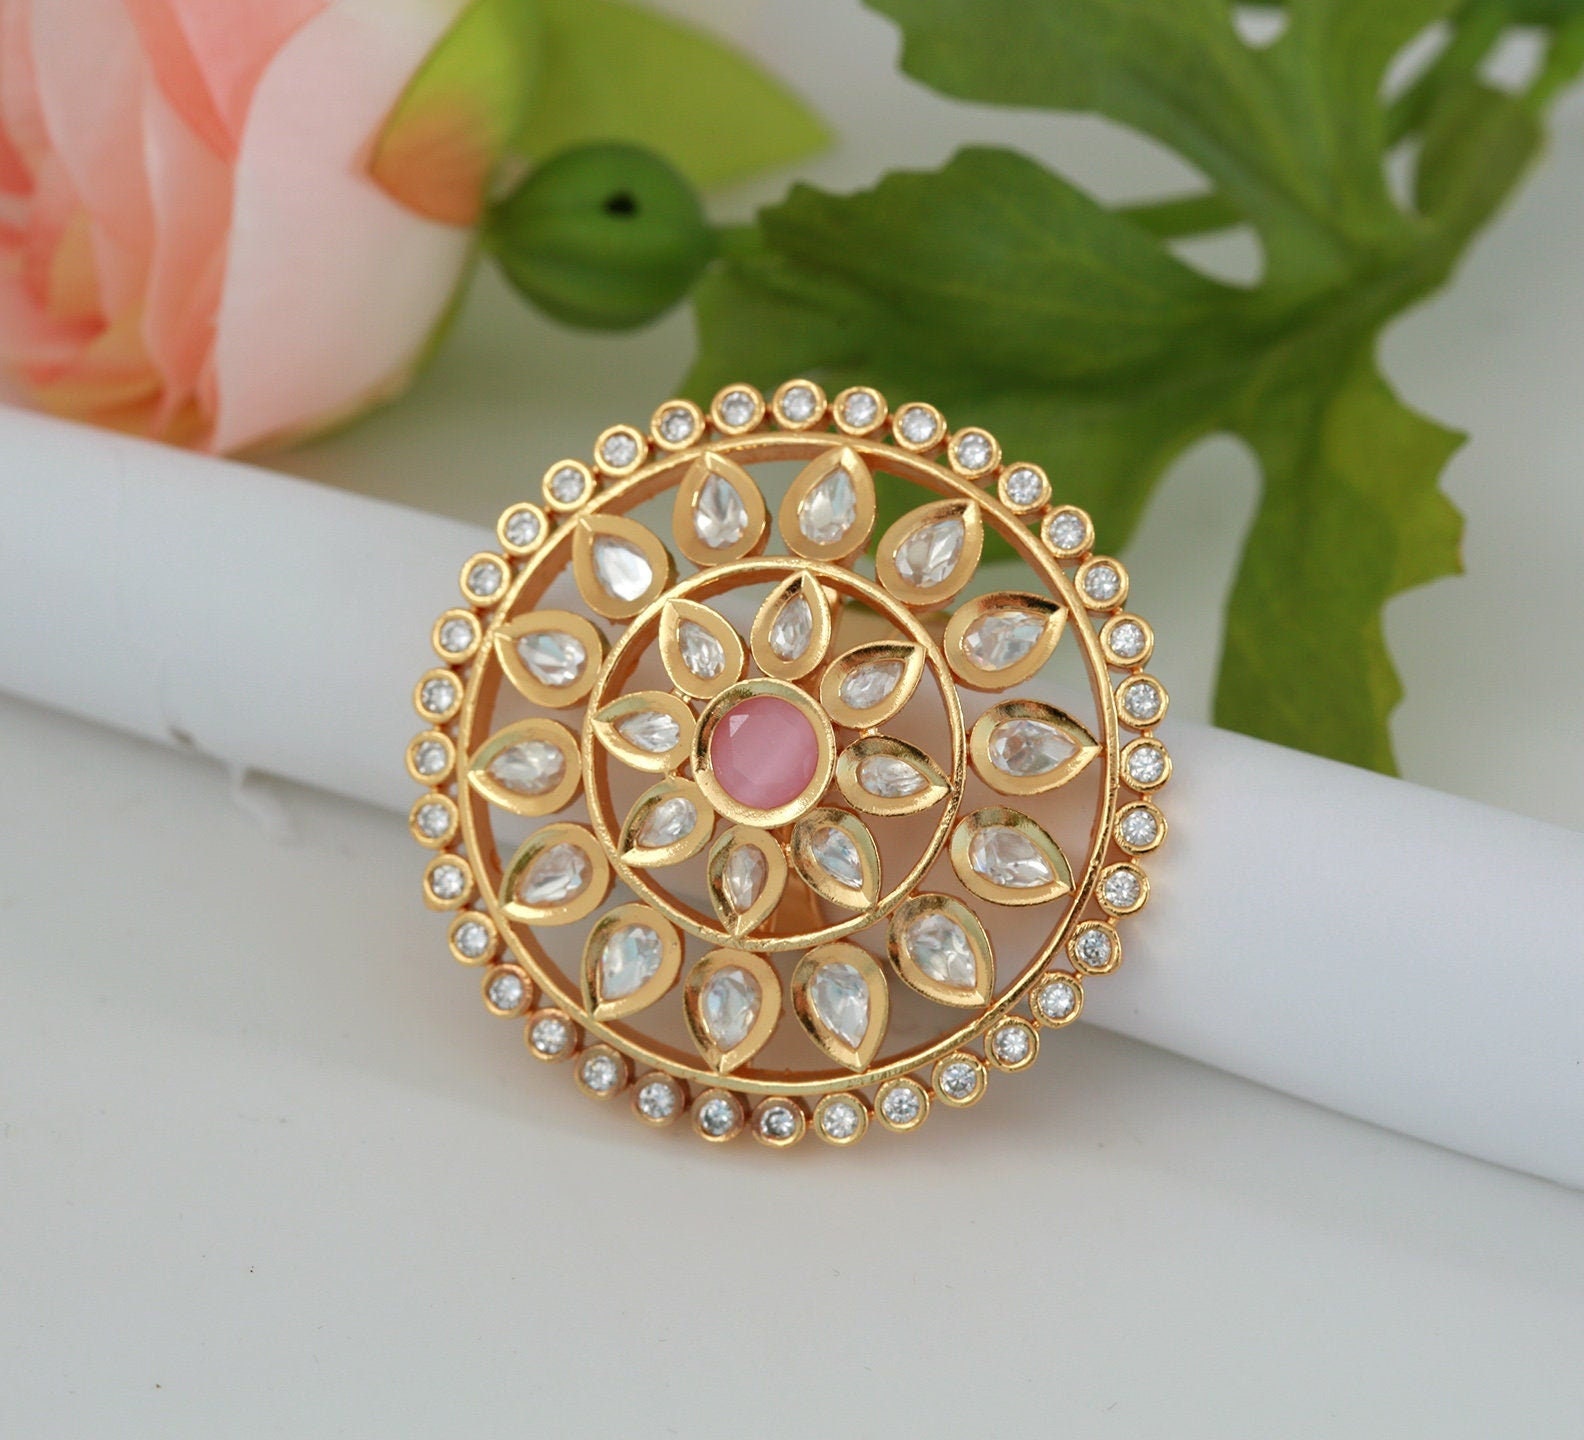 Pin by Tejal Naik on Jewelry | Adjustable rings, Rings, Kalki